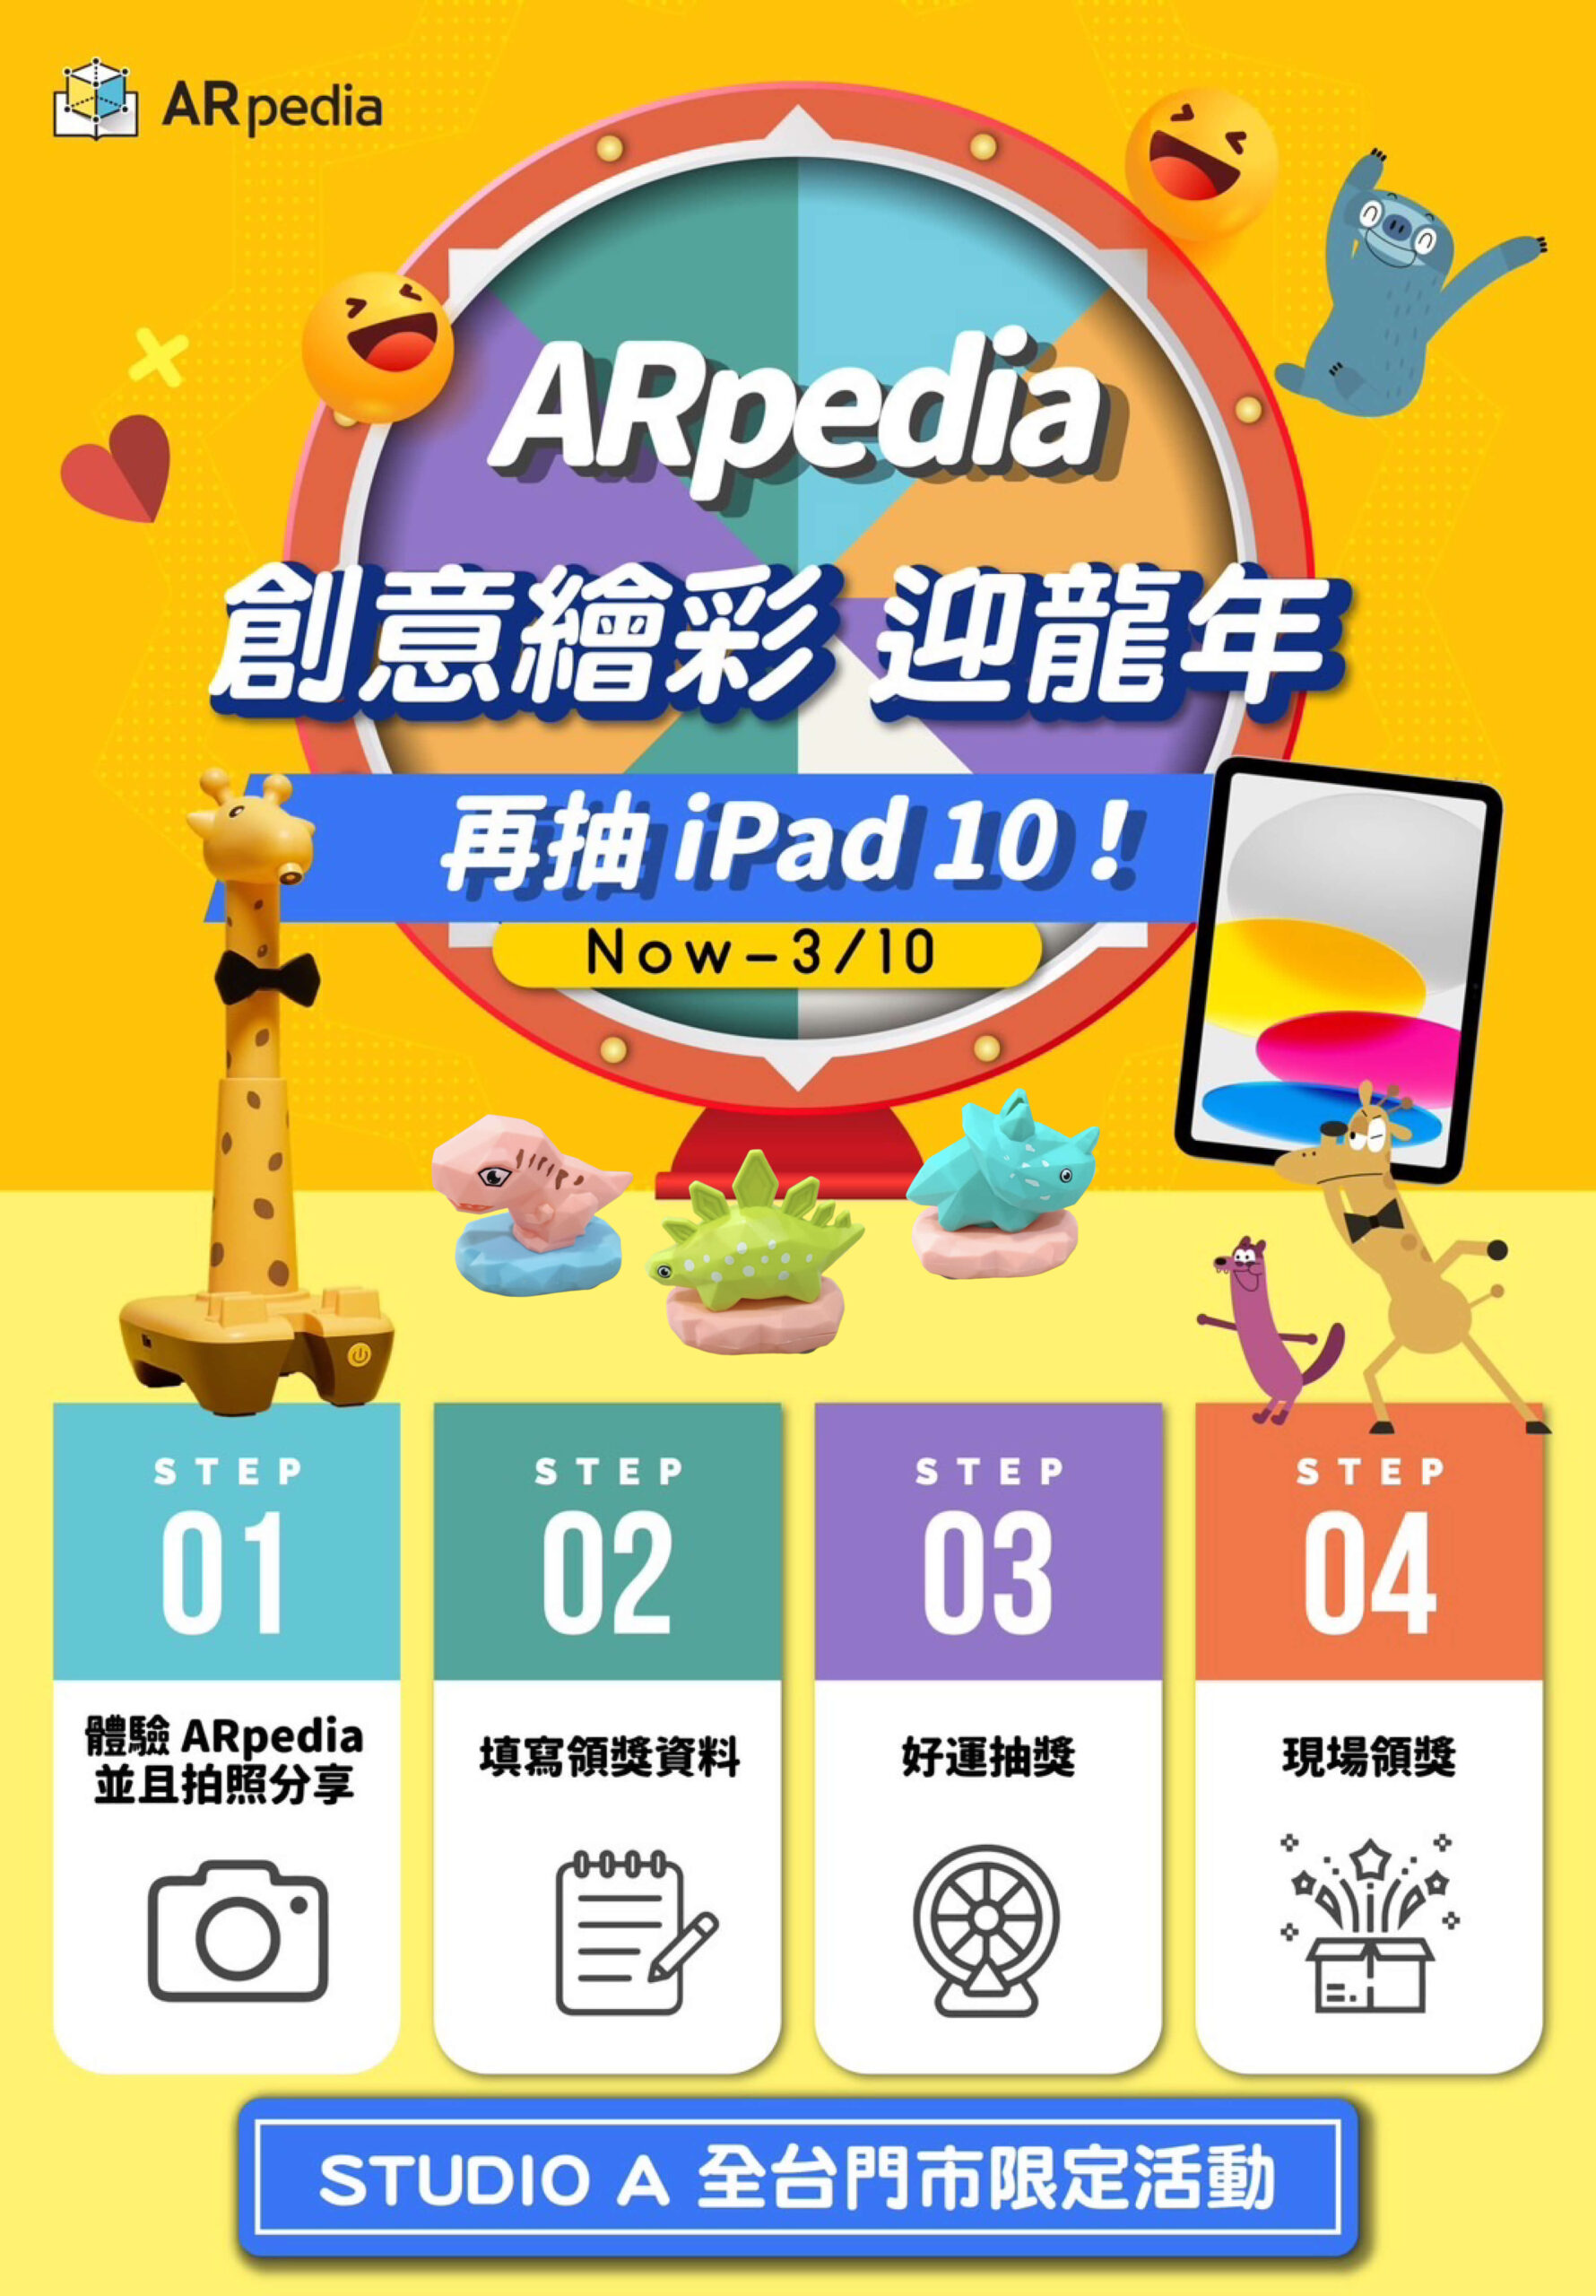 「ARpedia 創意繪彩迎龍年 -全新體驗活動」